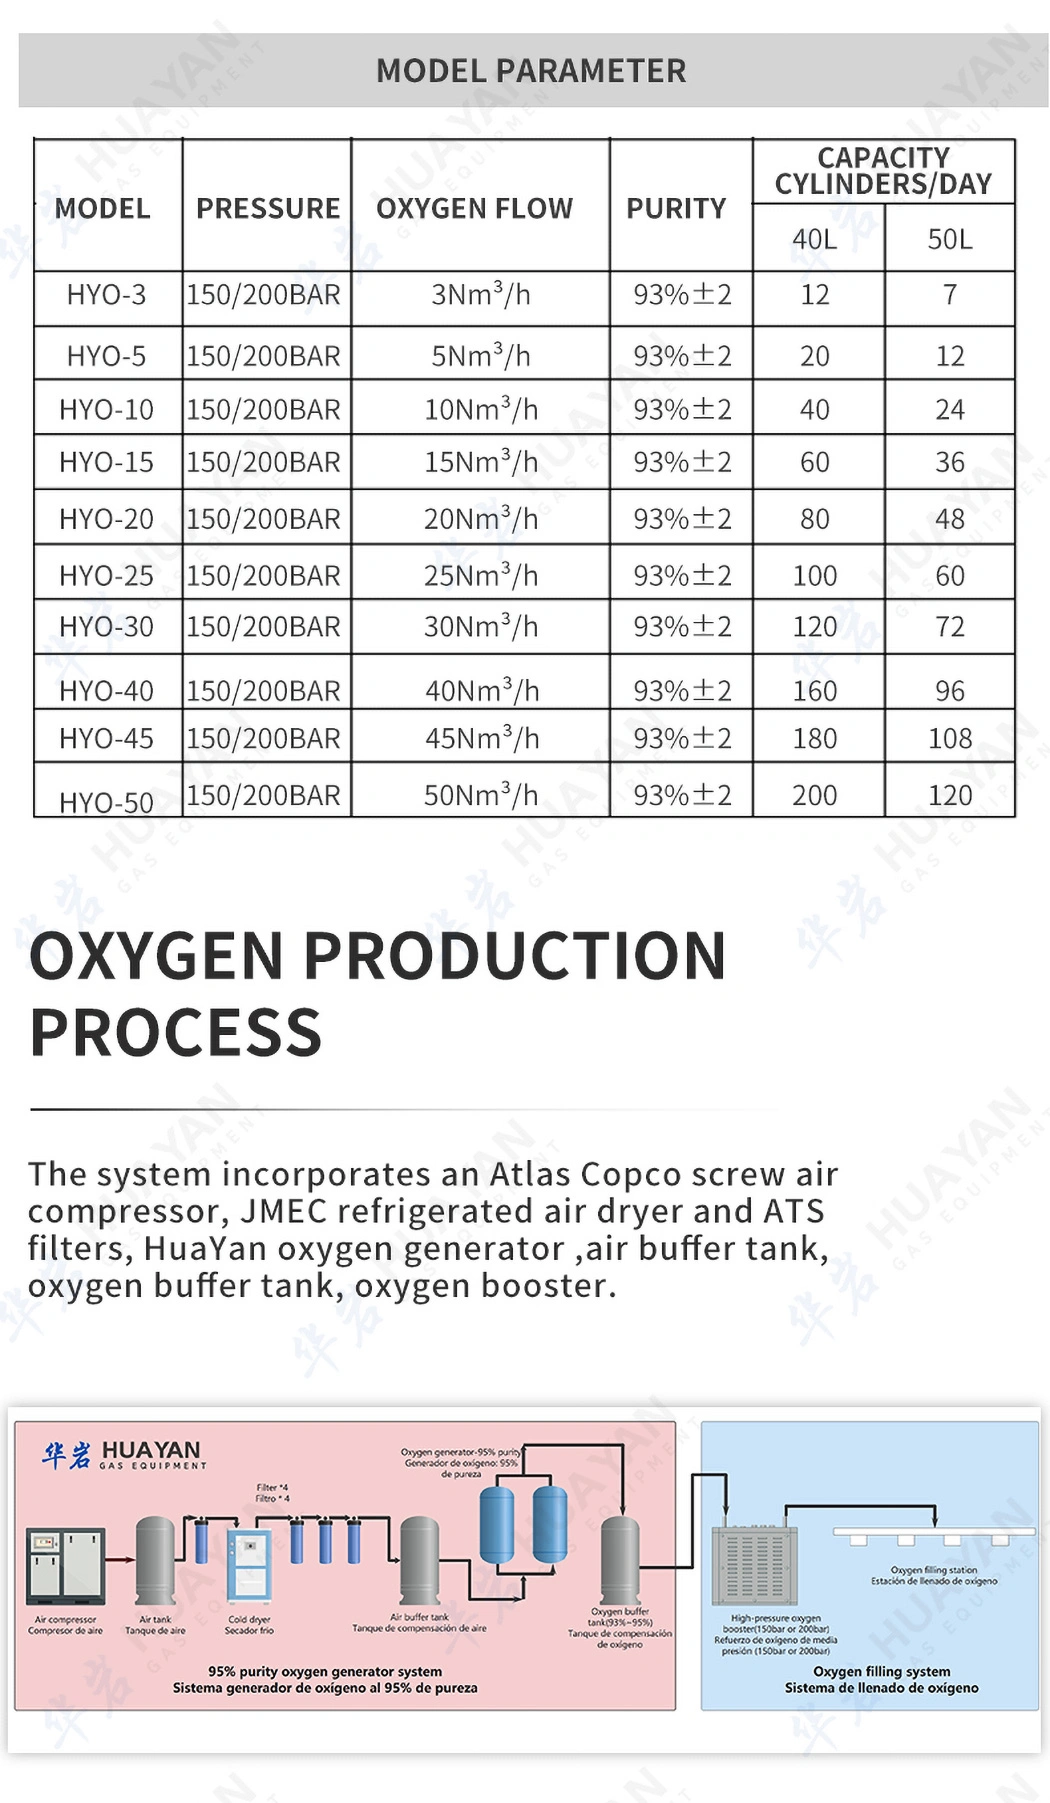 Hyo-30 Hospital Electric Skid-Mounted Oxygen Plant Industrial Psa Oxygen Generator